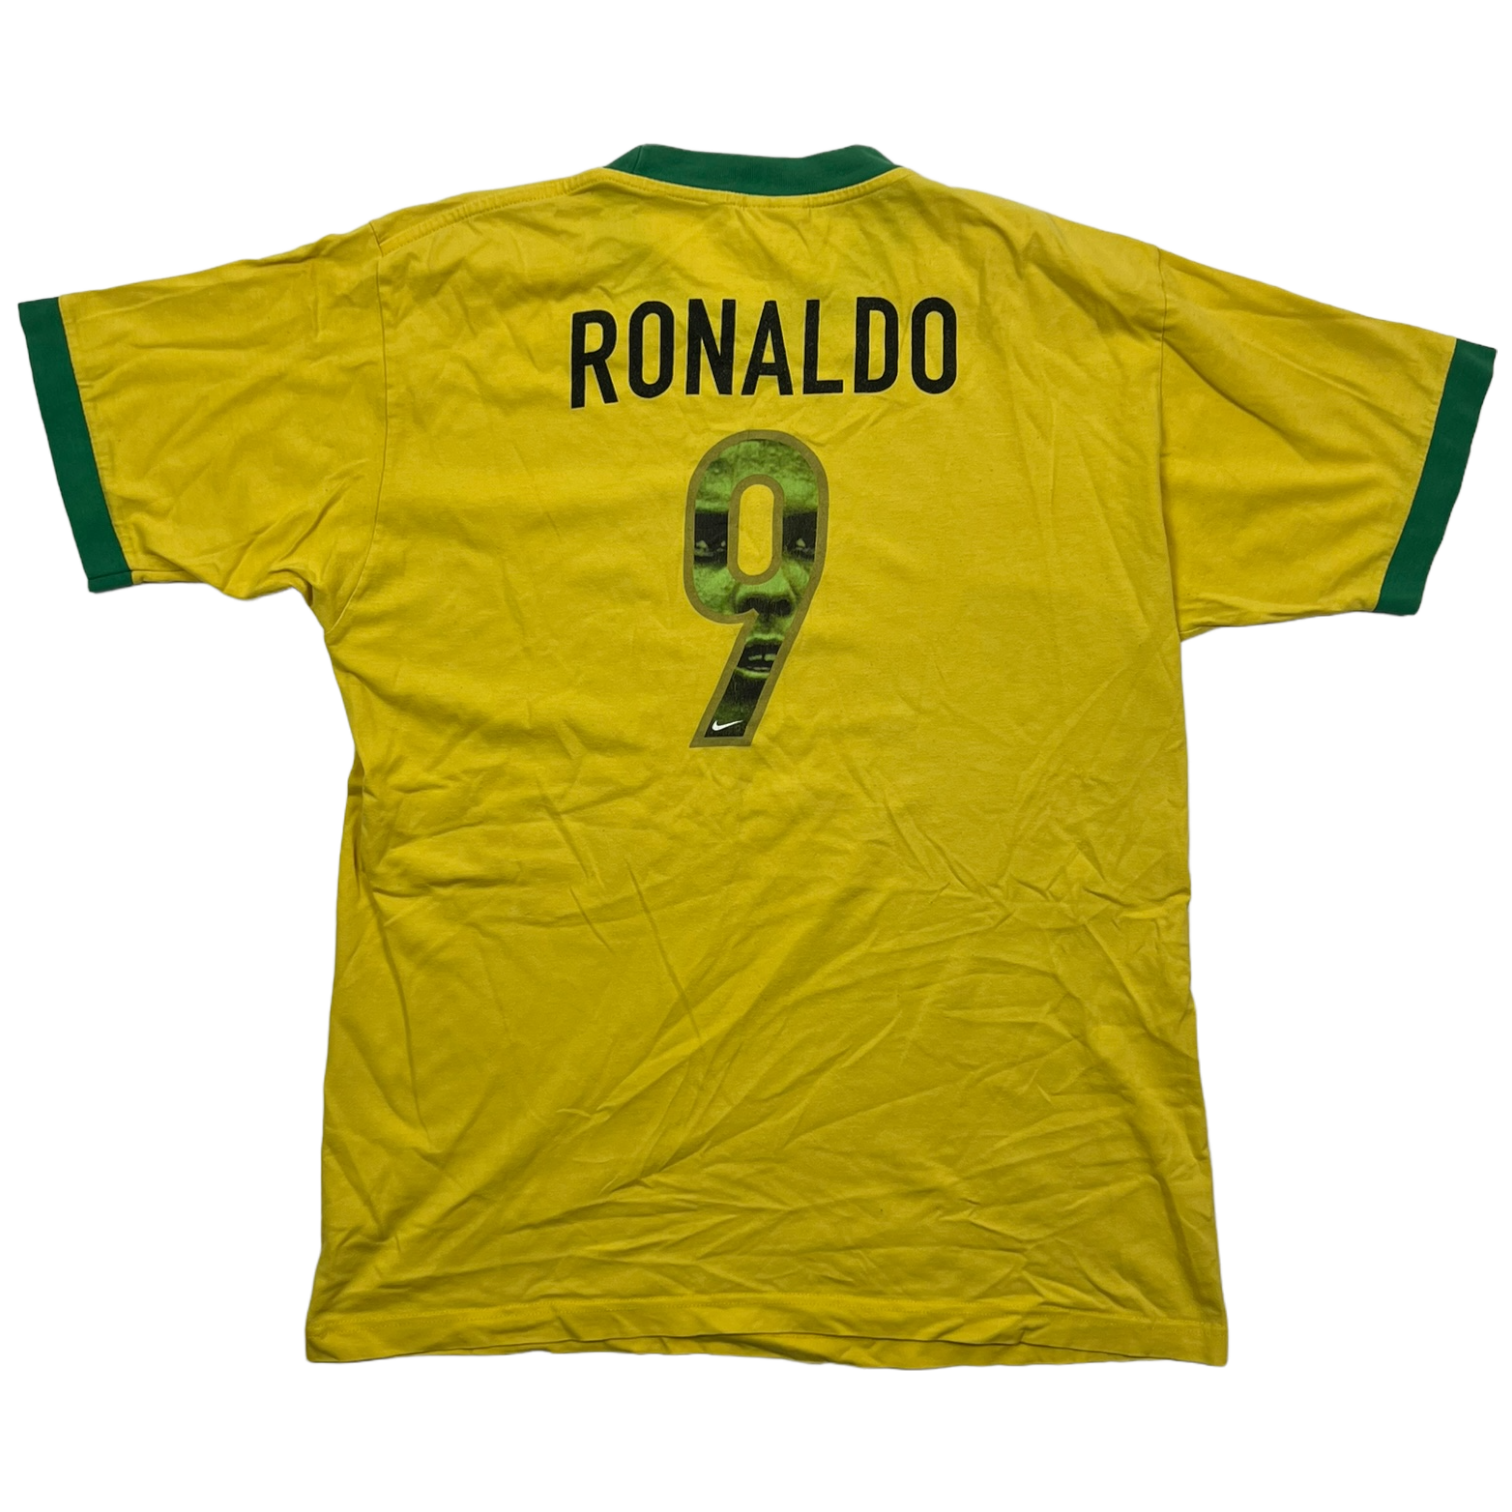 Nike Brazil T-Shirt (M)